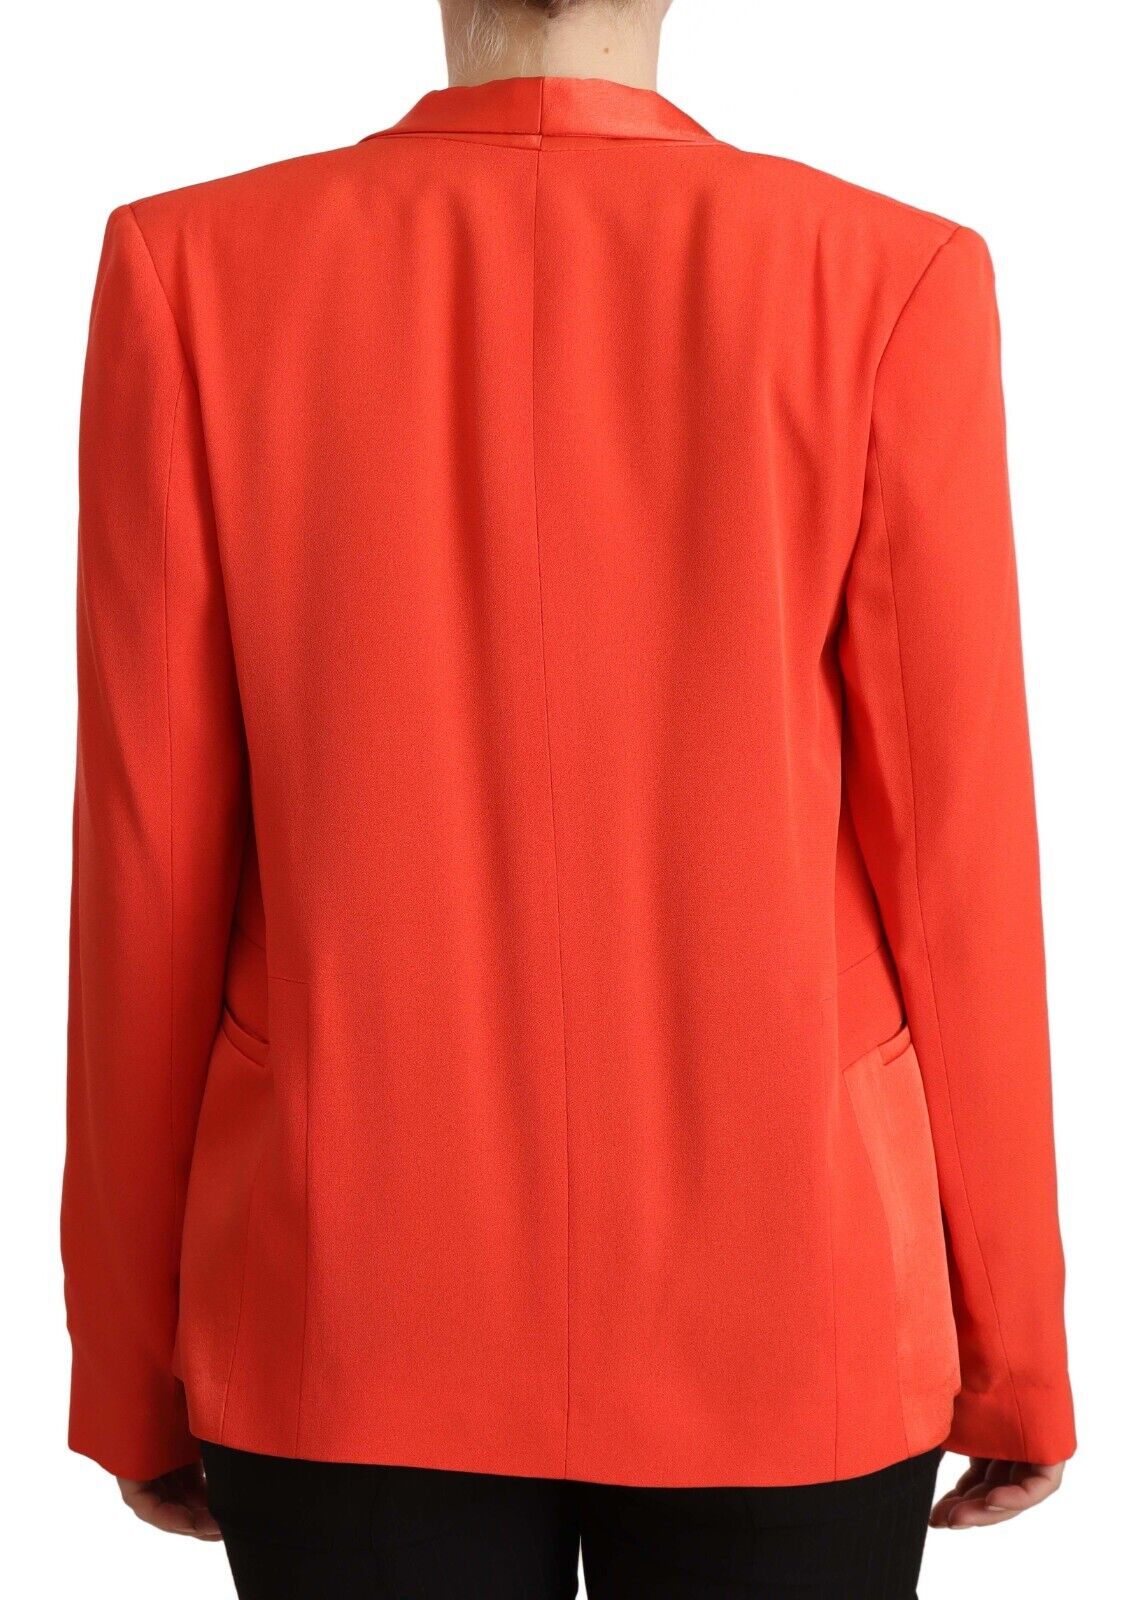 CO|TE Orange Long Sleeves Acetate Blazer Pocket Overcoat Jacket